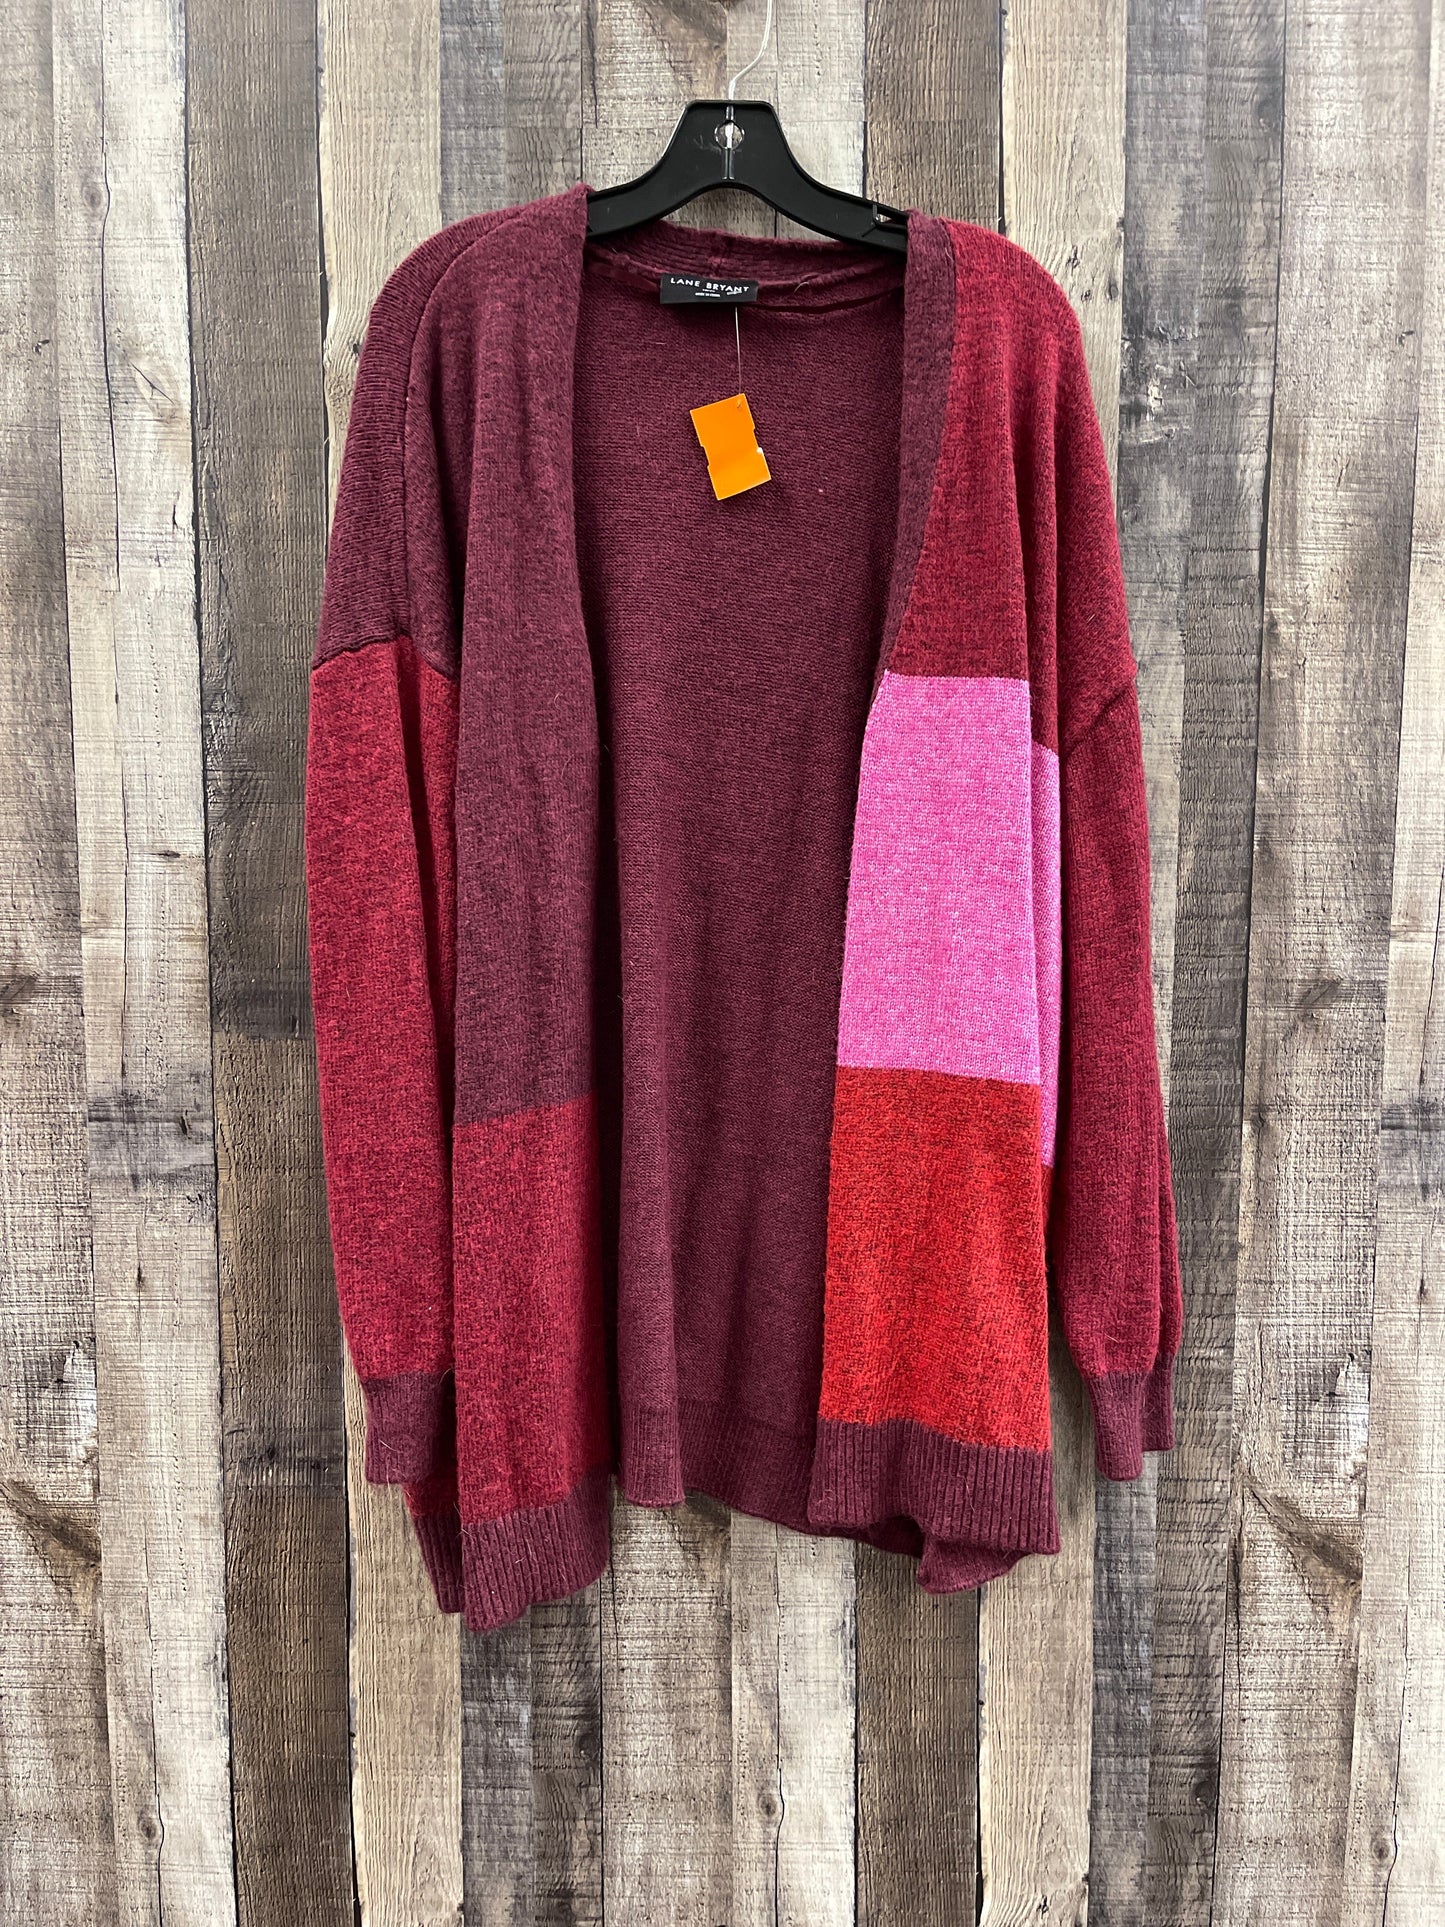 Sweater Cardigan By Lane Bryant  Size: Xl (18/20)